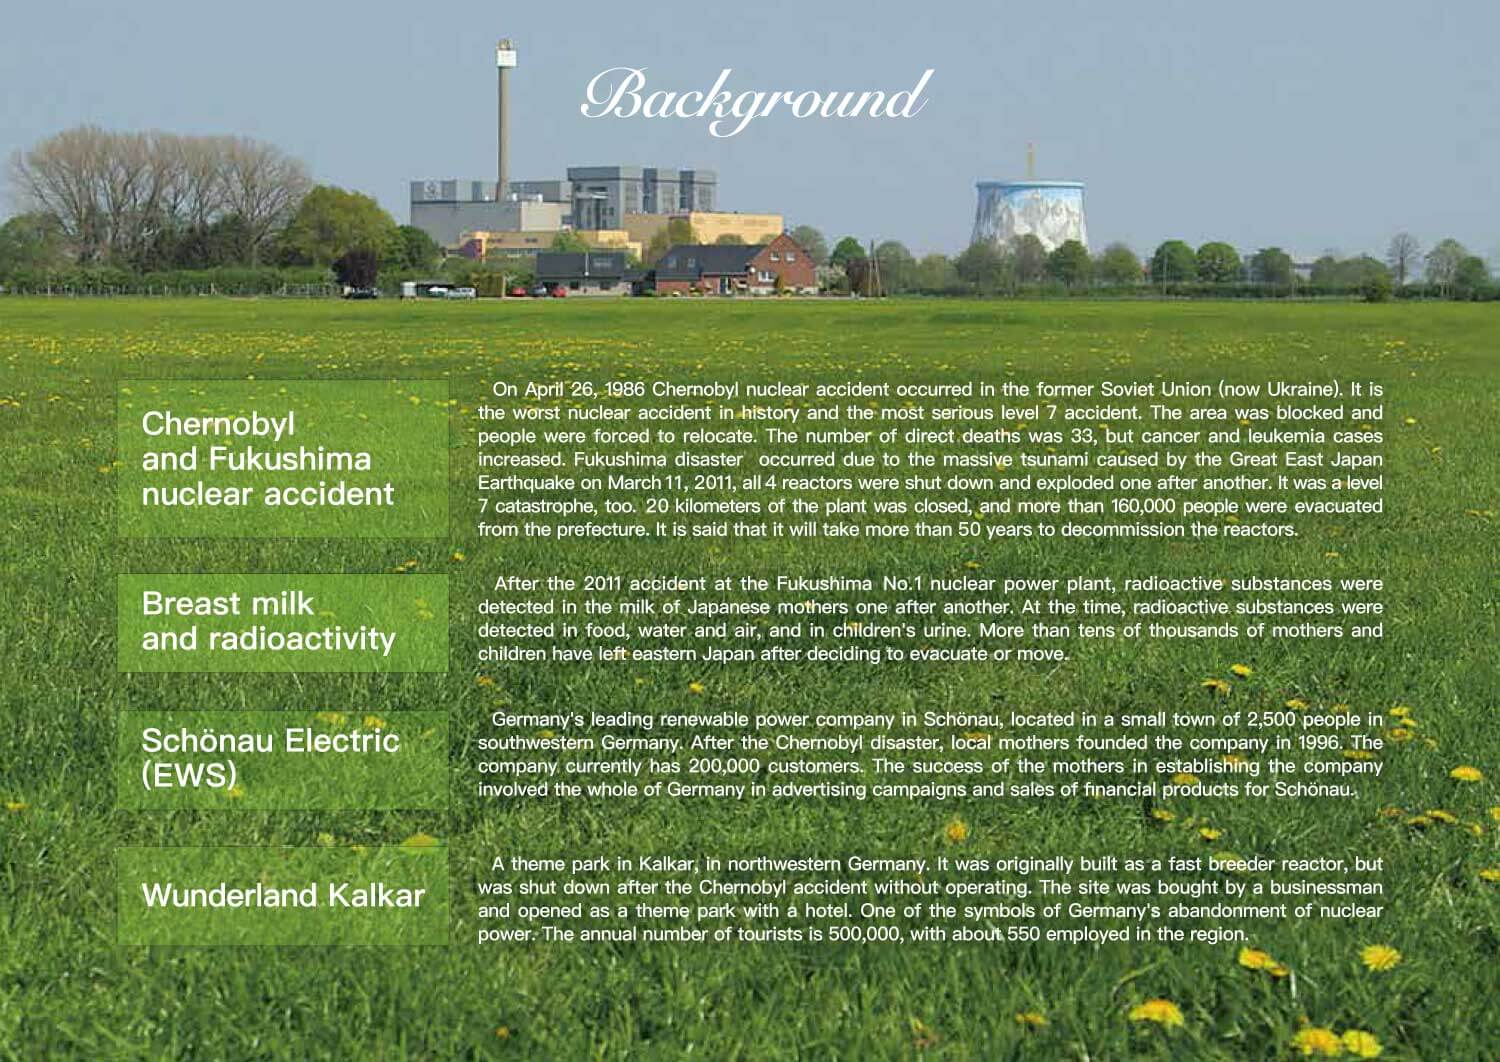 Background Chernobyl
and Fukushima nuclear accident. Breast milk and radioactivity. Schönau Electric
(EWS). Wunderland Kalkar